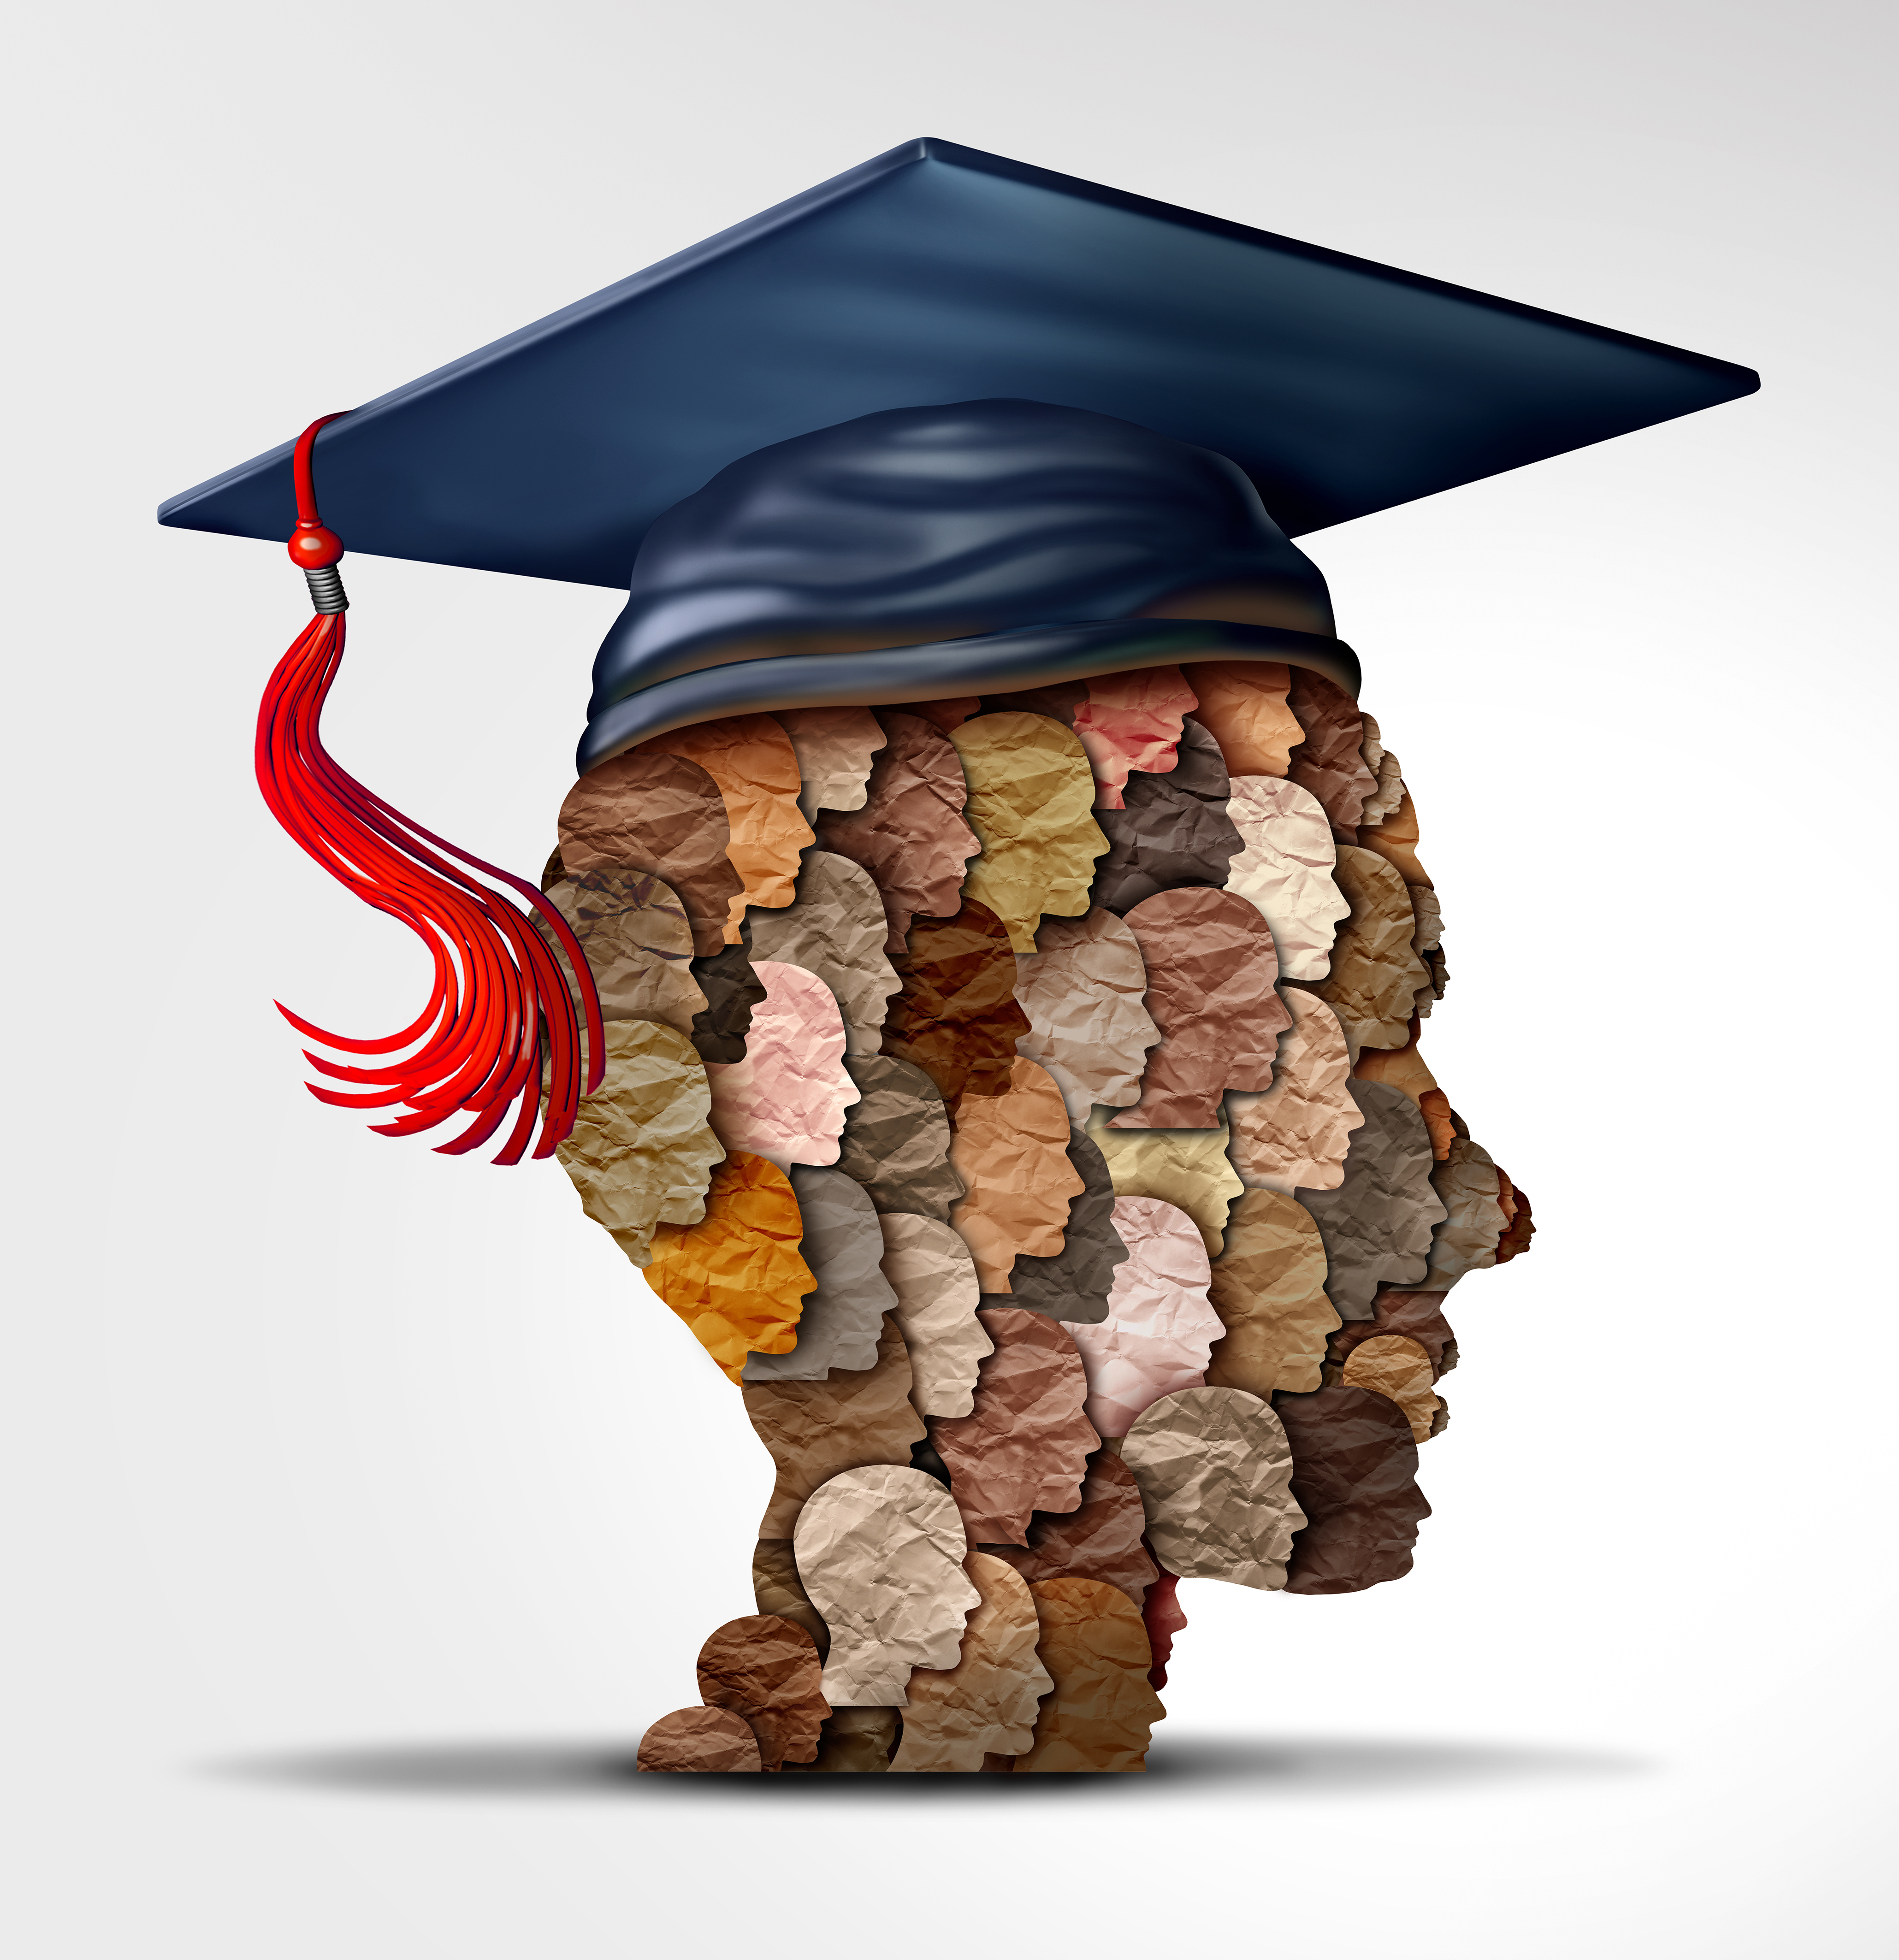 Multi-racial illustration of profile wearing graduation cap